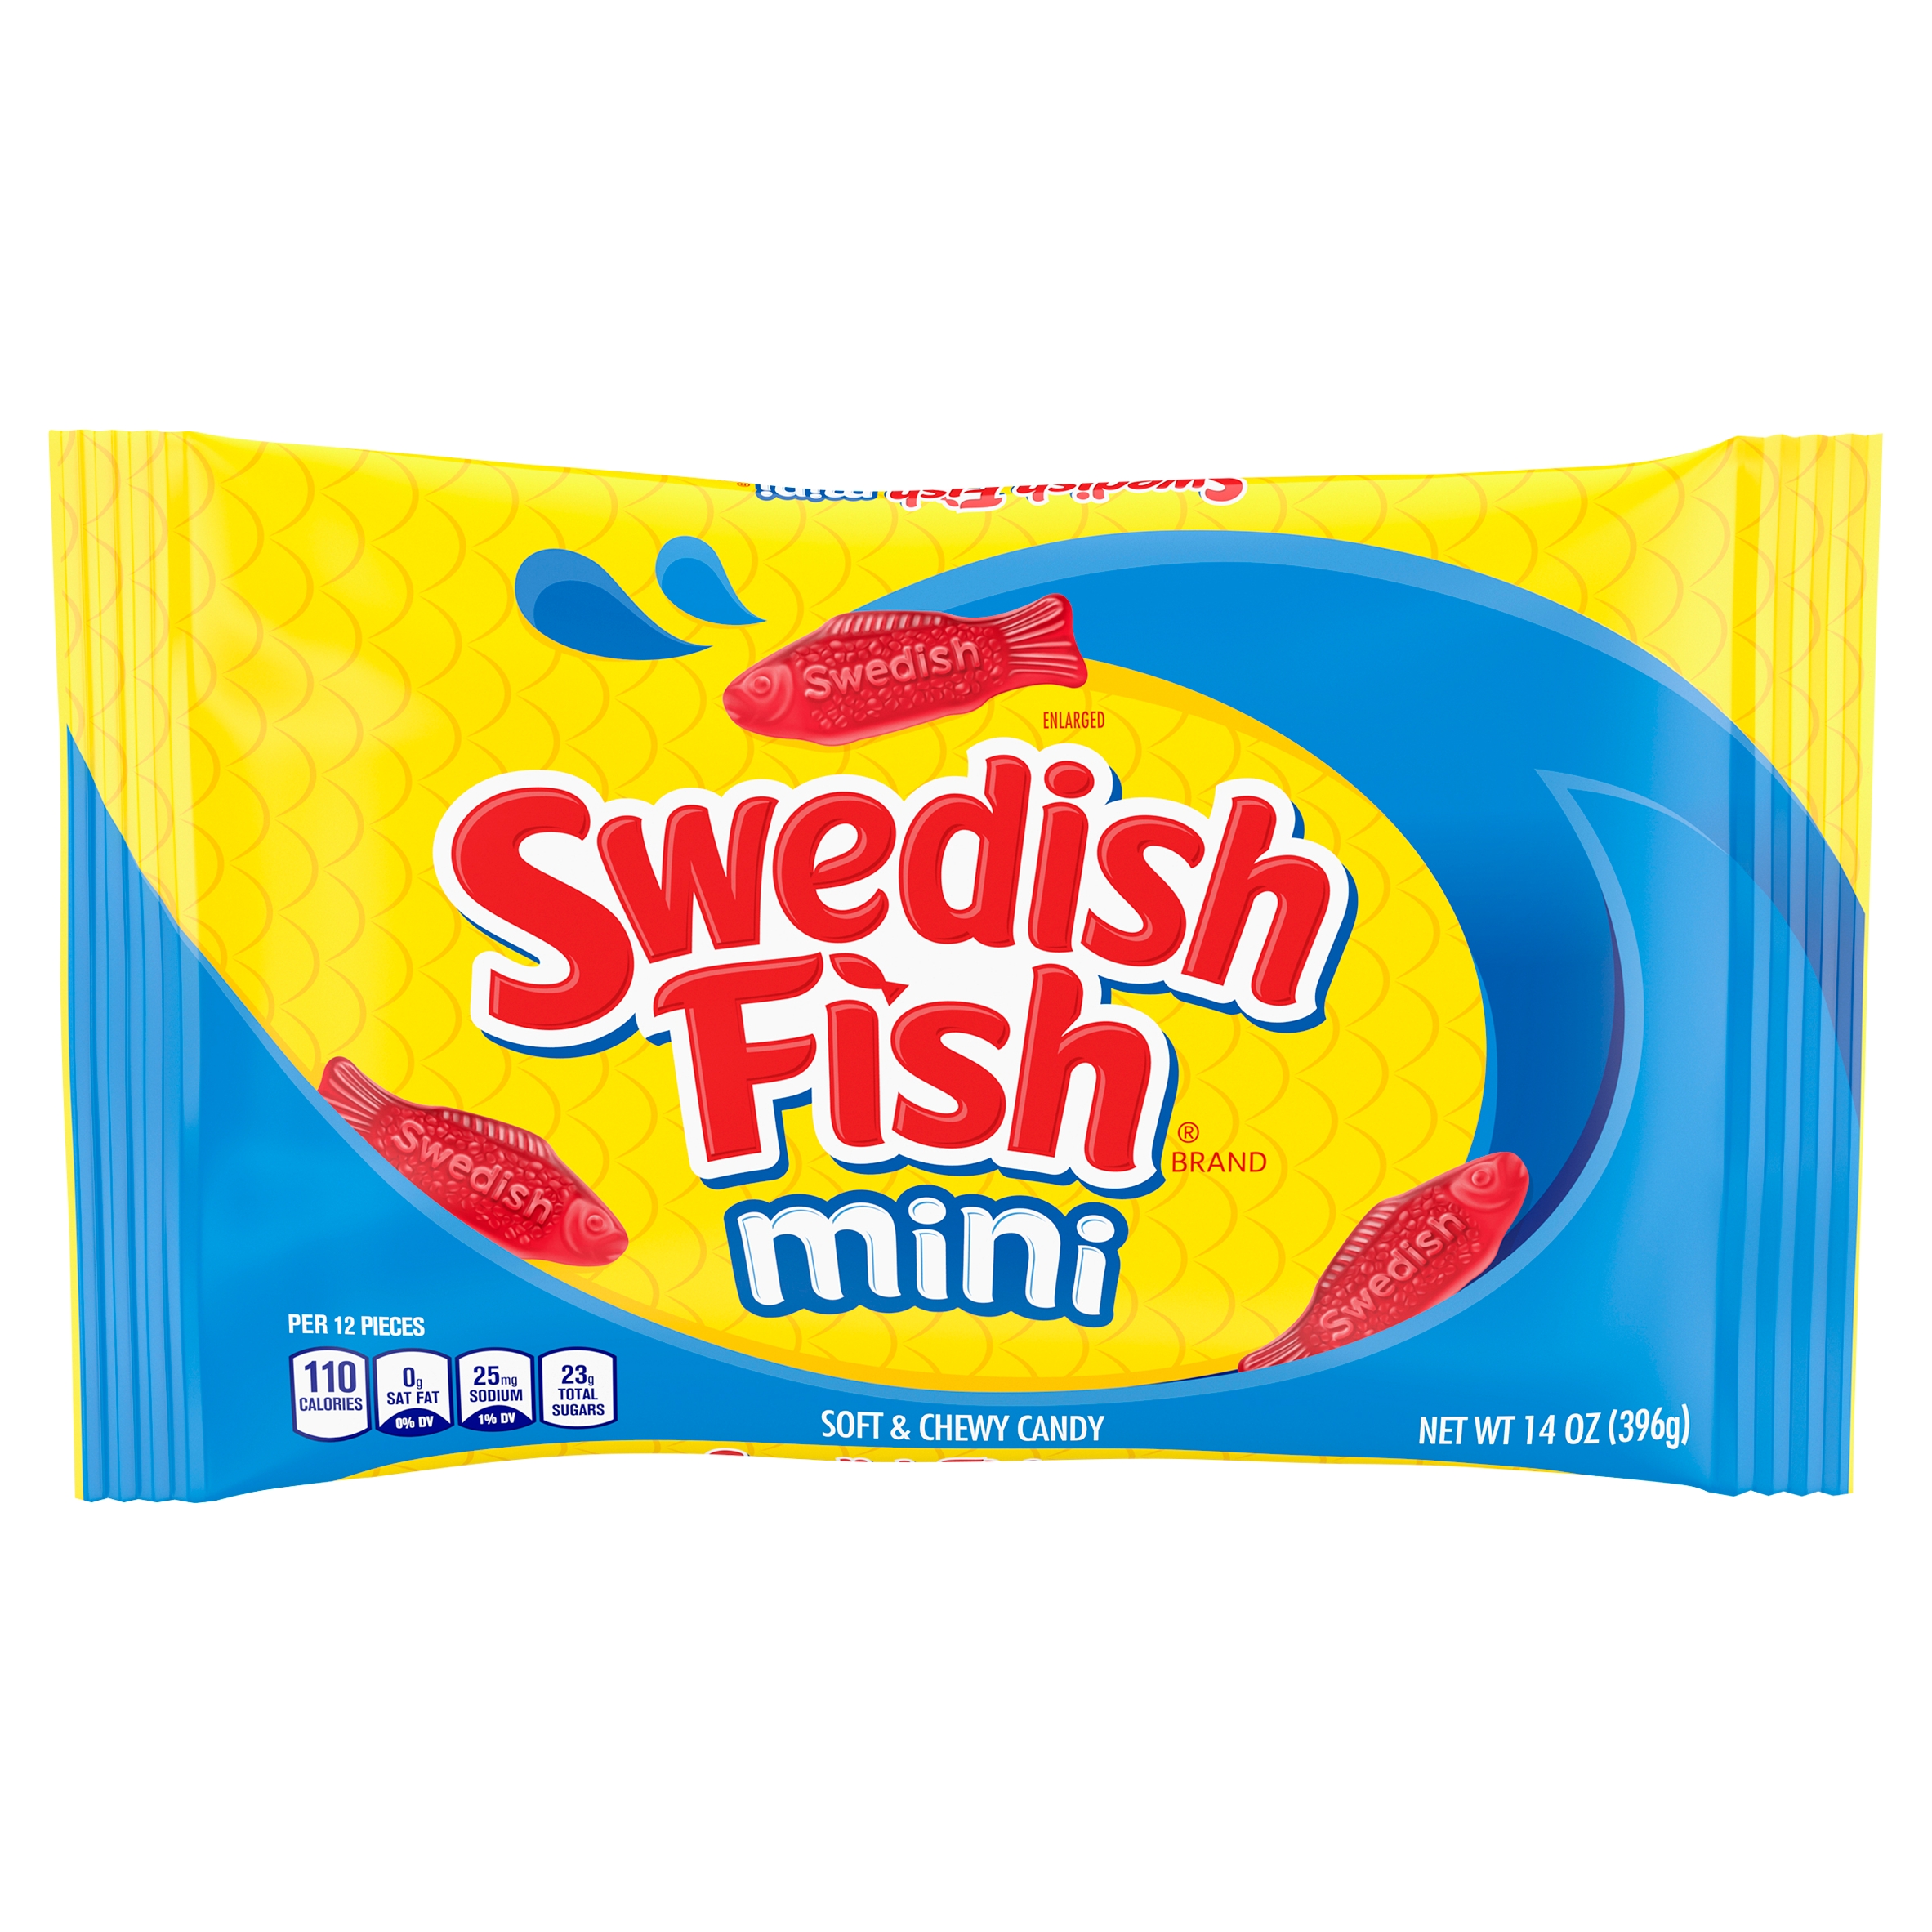 SWEDISH FISH Mini Soft & Chewy Candy, 14 oz Bag - image 2 of 9